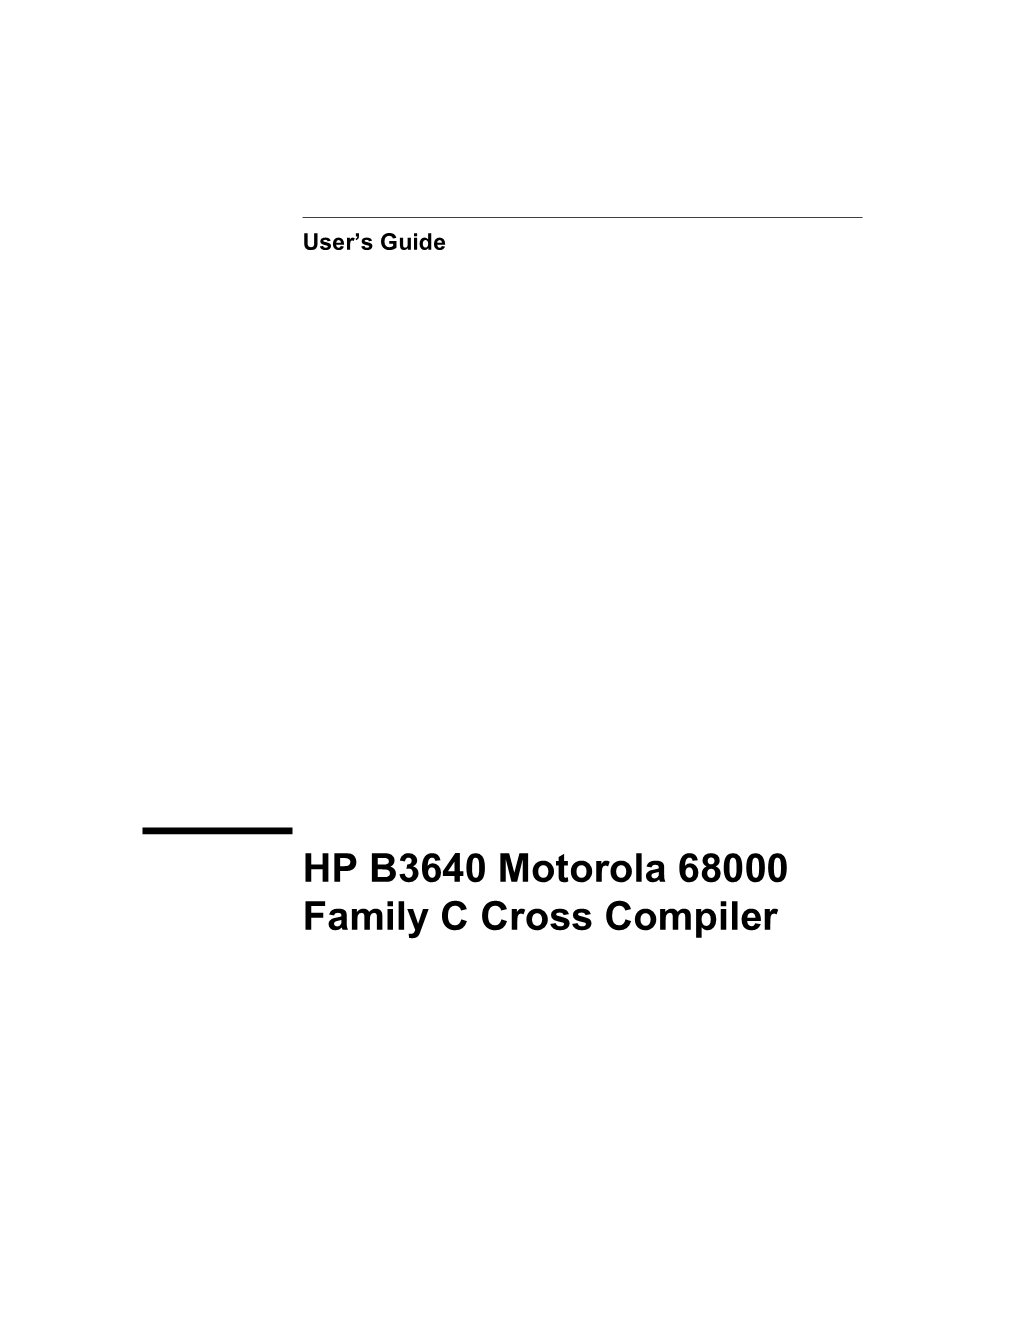 Motorola 68000 Family C Cross Compiler Notice